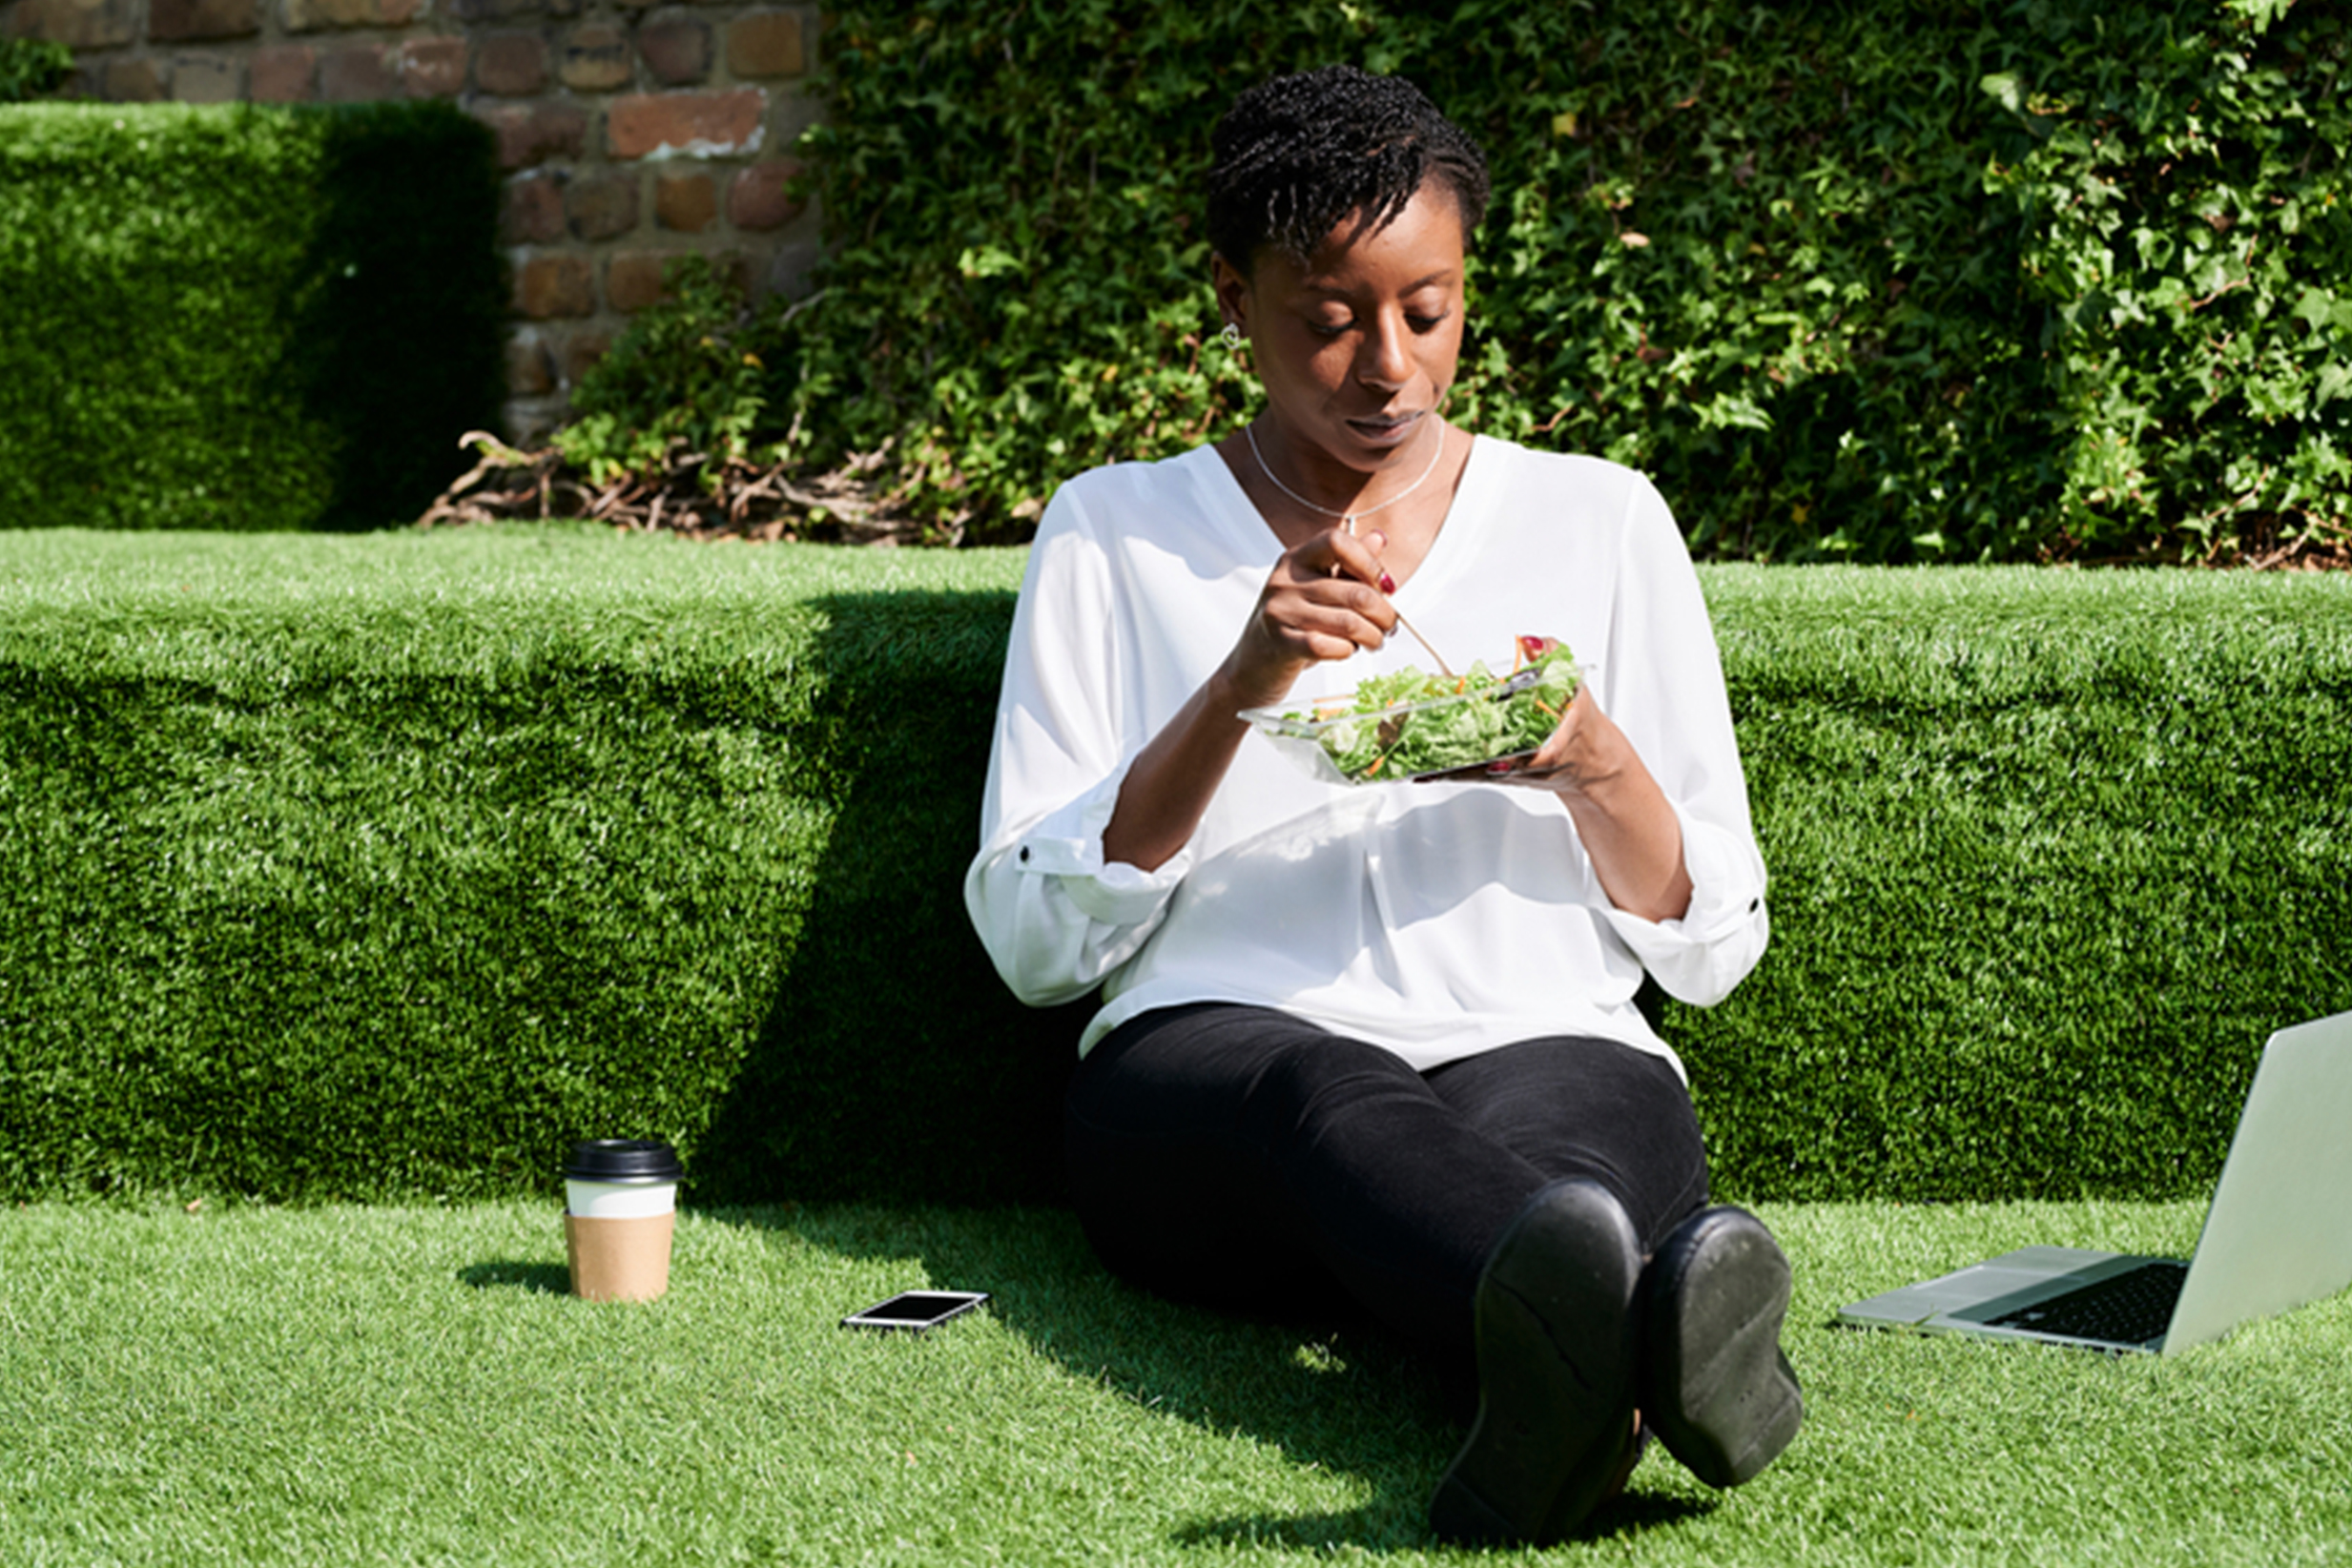 Woman sitting outside eating salad